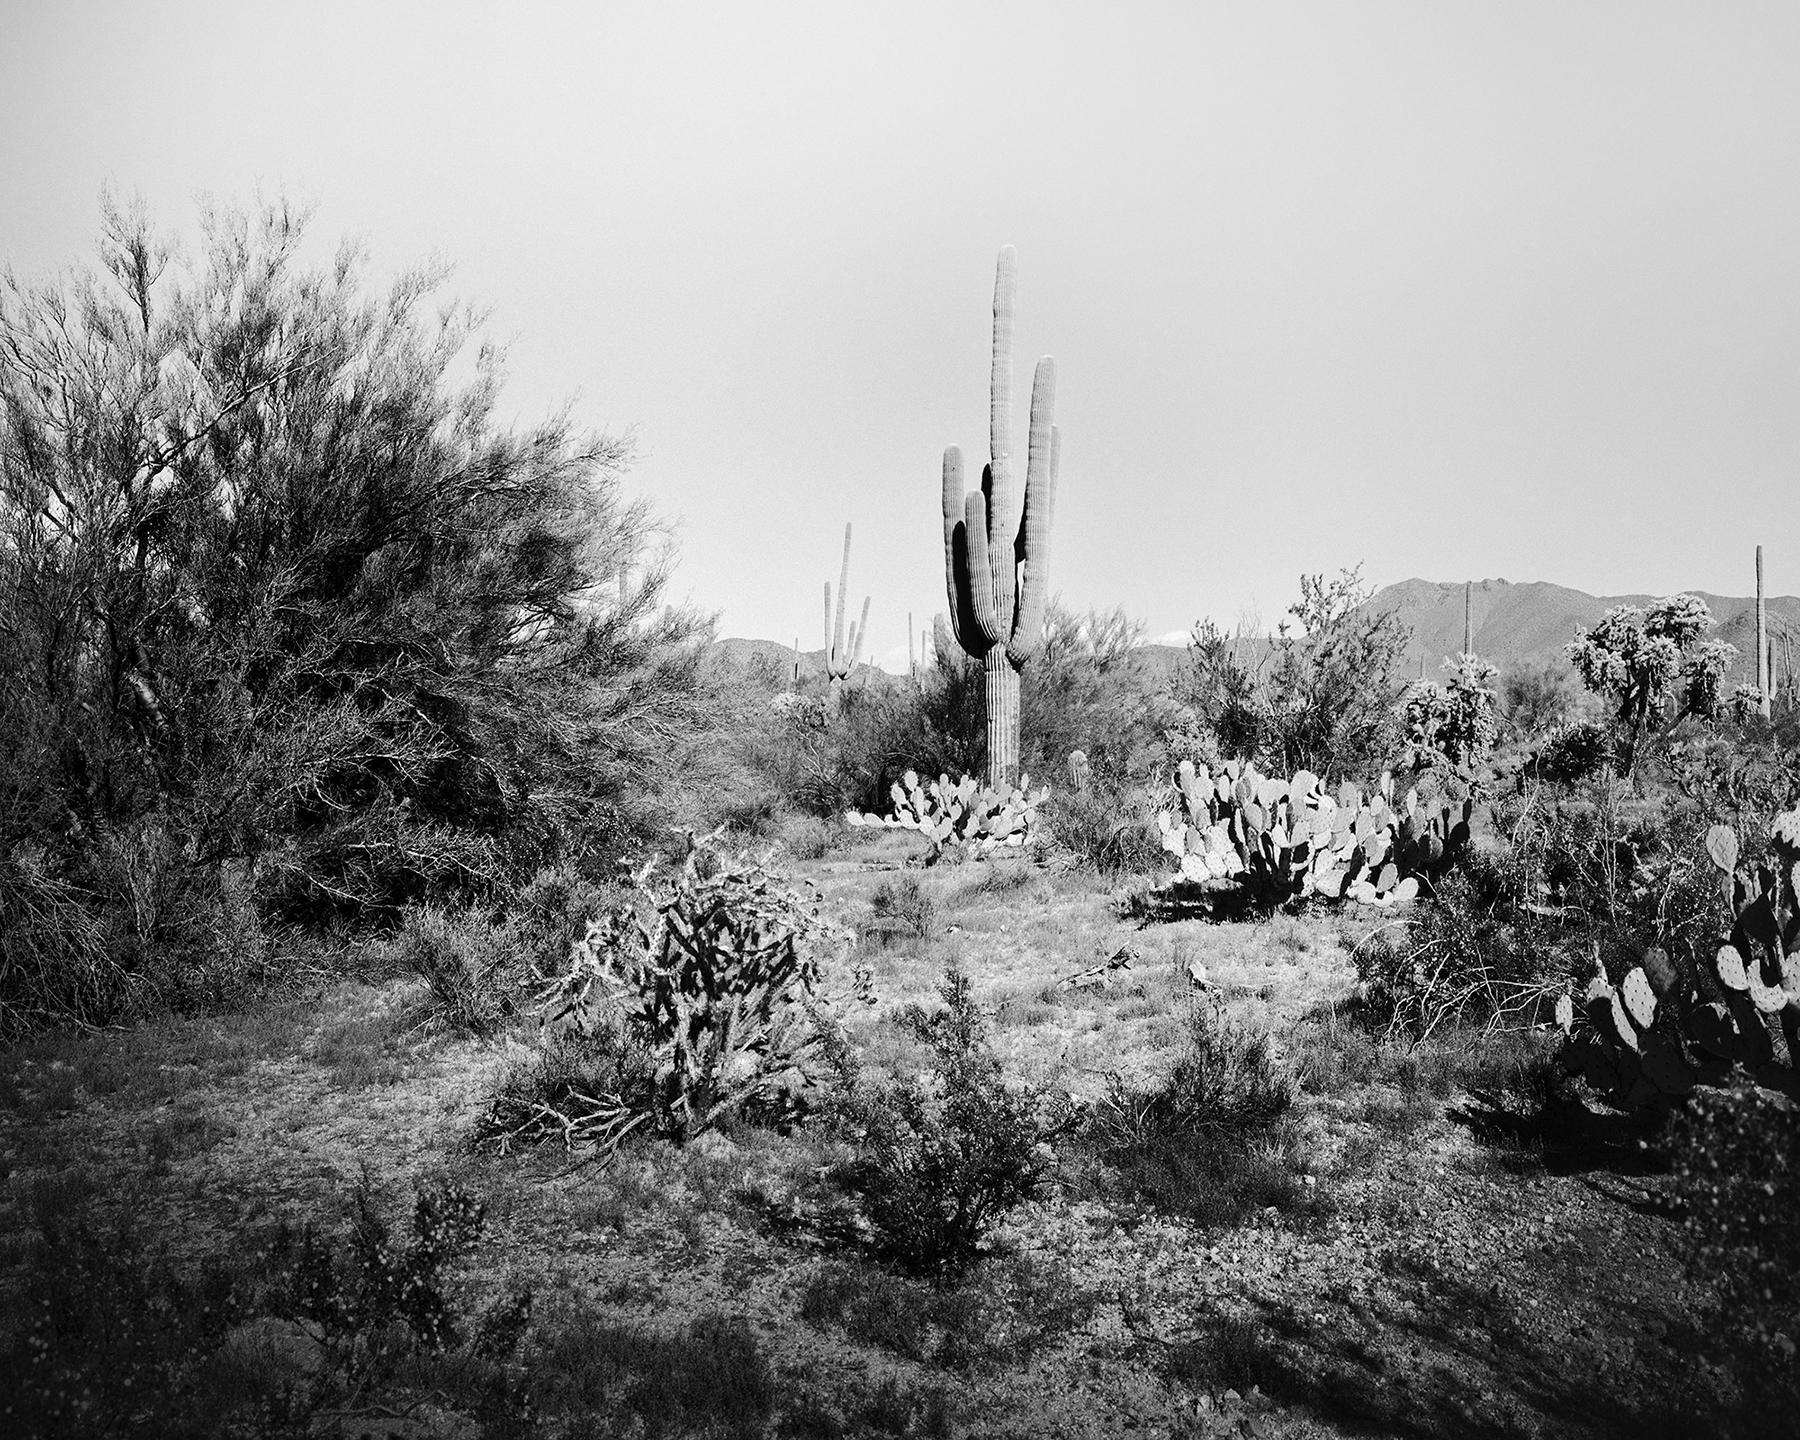 Saguaro Cactus, National Park, Arizona, USA, black and white landscape photo